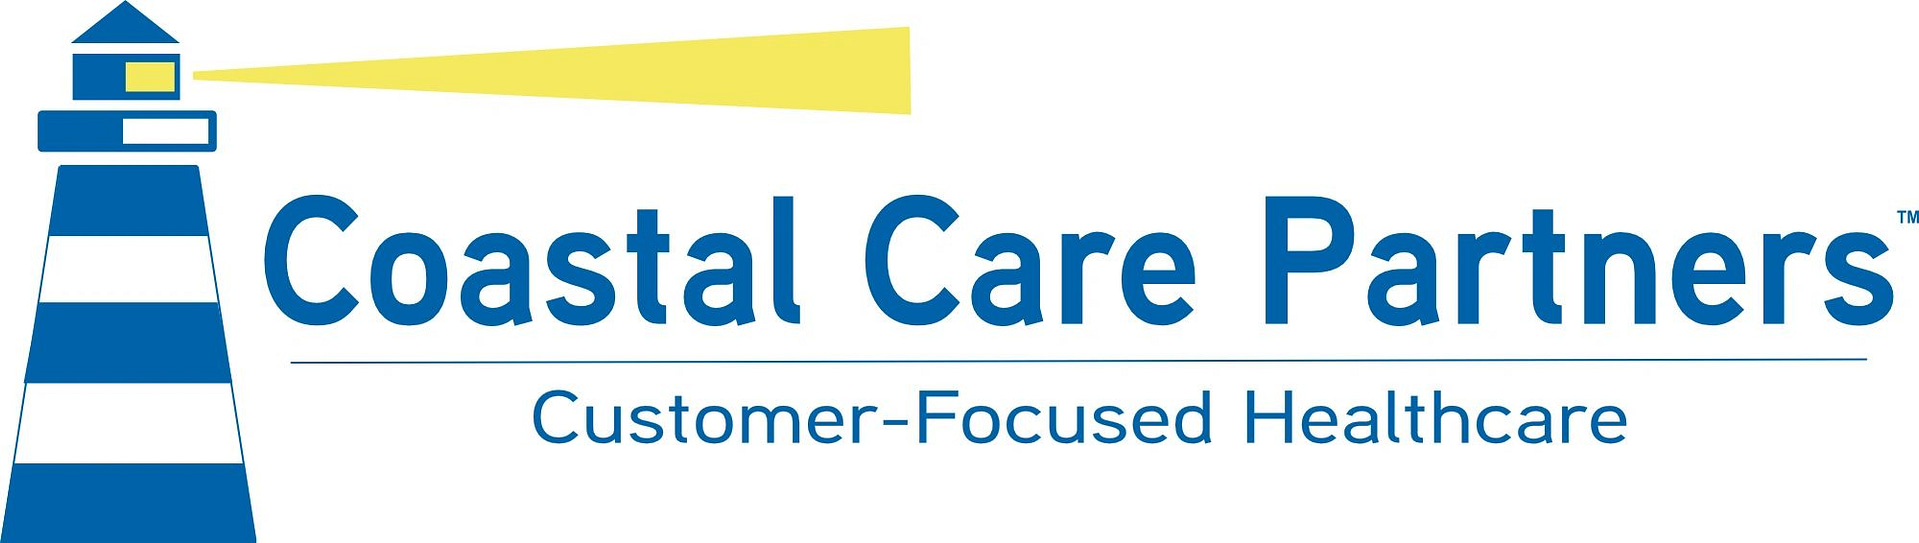 Coastal Care Partners